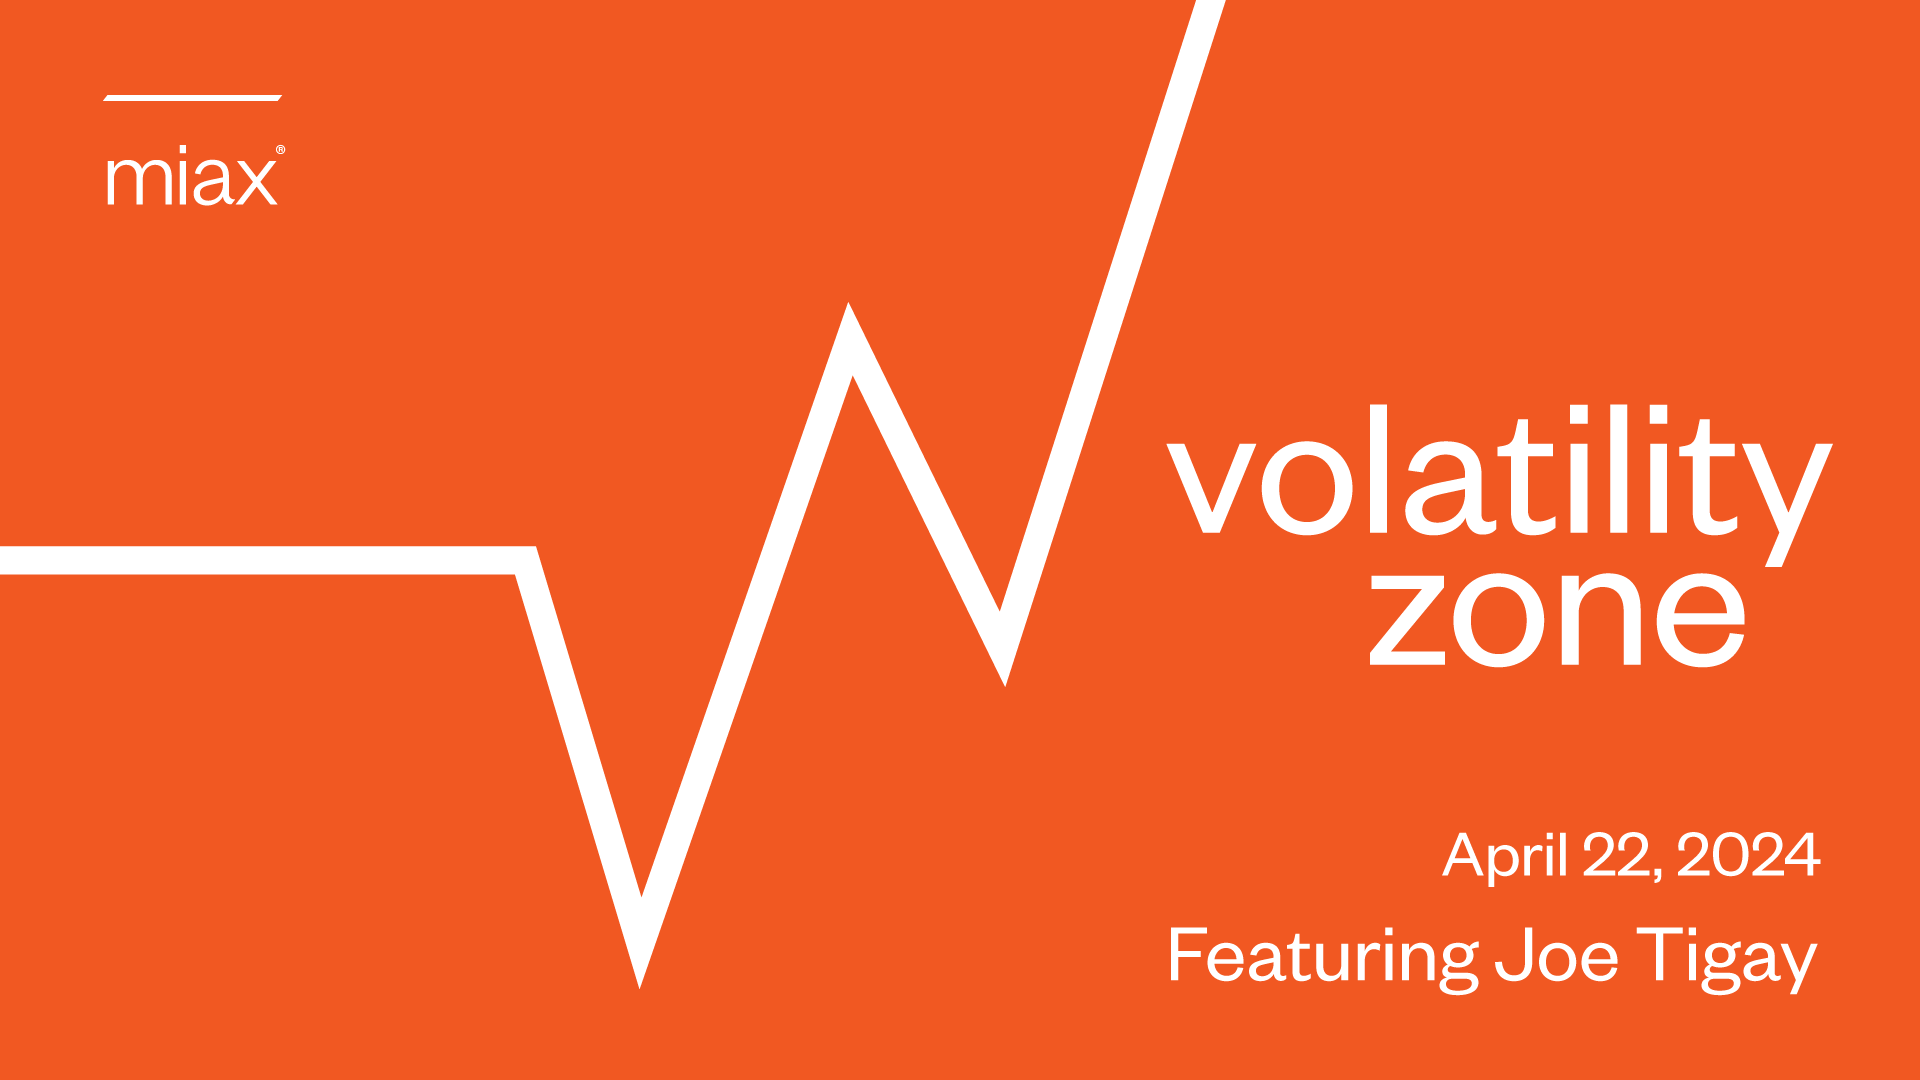 MIAX Volatility Zone April 22, 2024